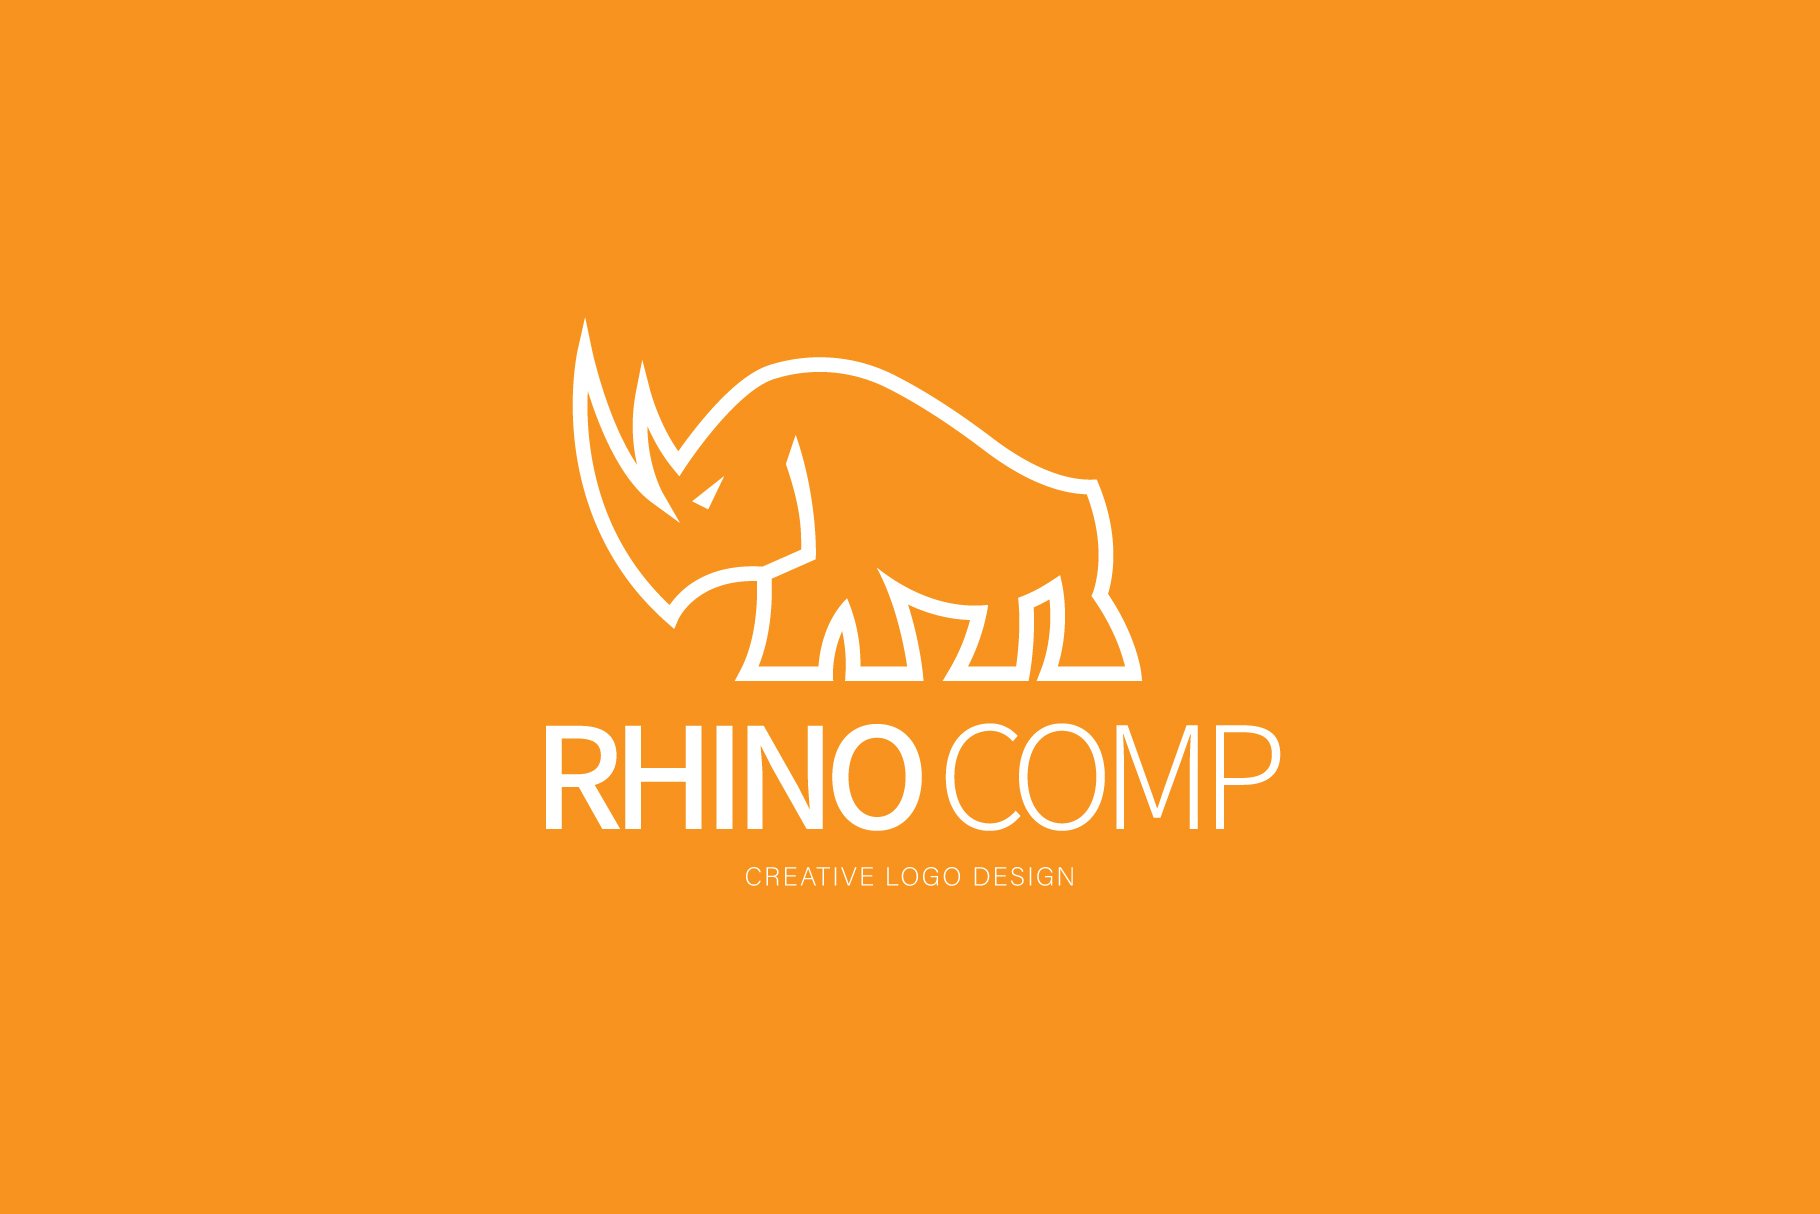 Orange matte background with the white outline rhino.